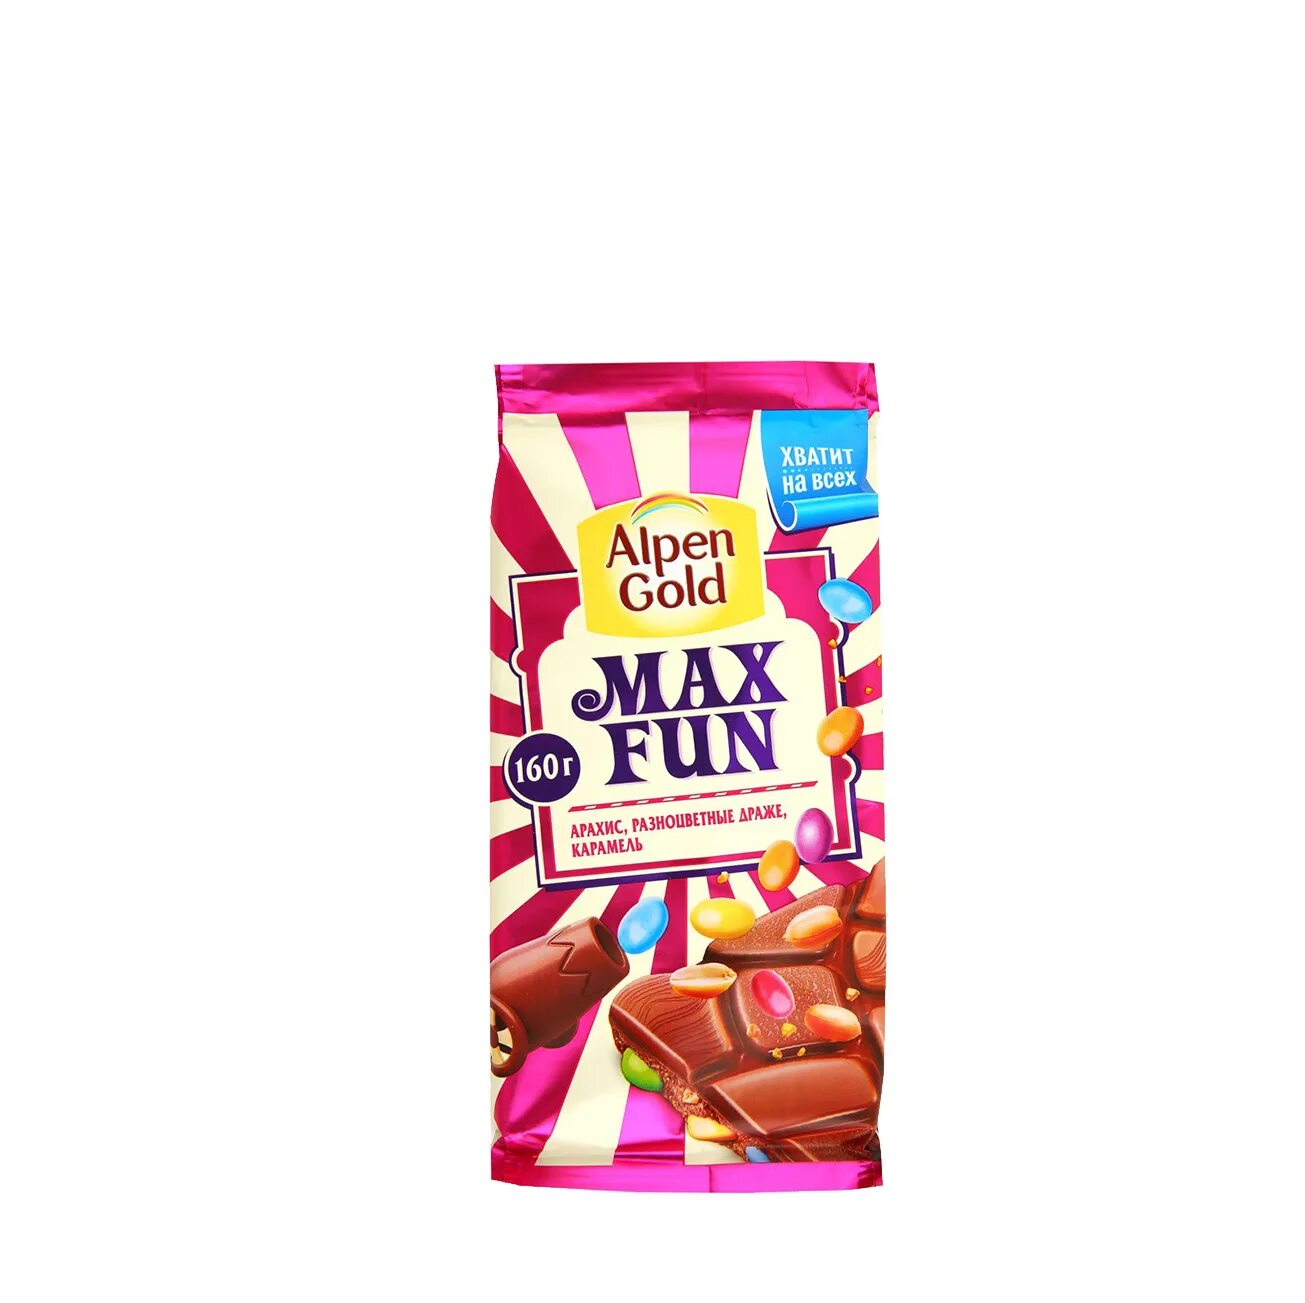 Fun mix. Шоколад Альпен Голд Max fun, взрывная карамель, 160 г. Шоколад Альпен Гольд Макс. Alpen Gold Max Fan 150гр. Шоколад Альпен Гольд Макс с взрывной карамелью.